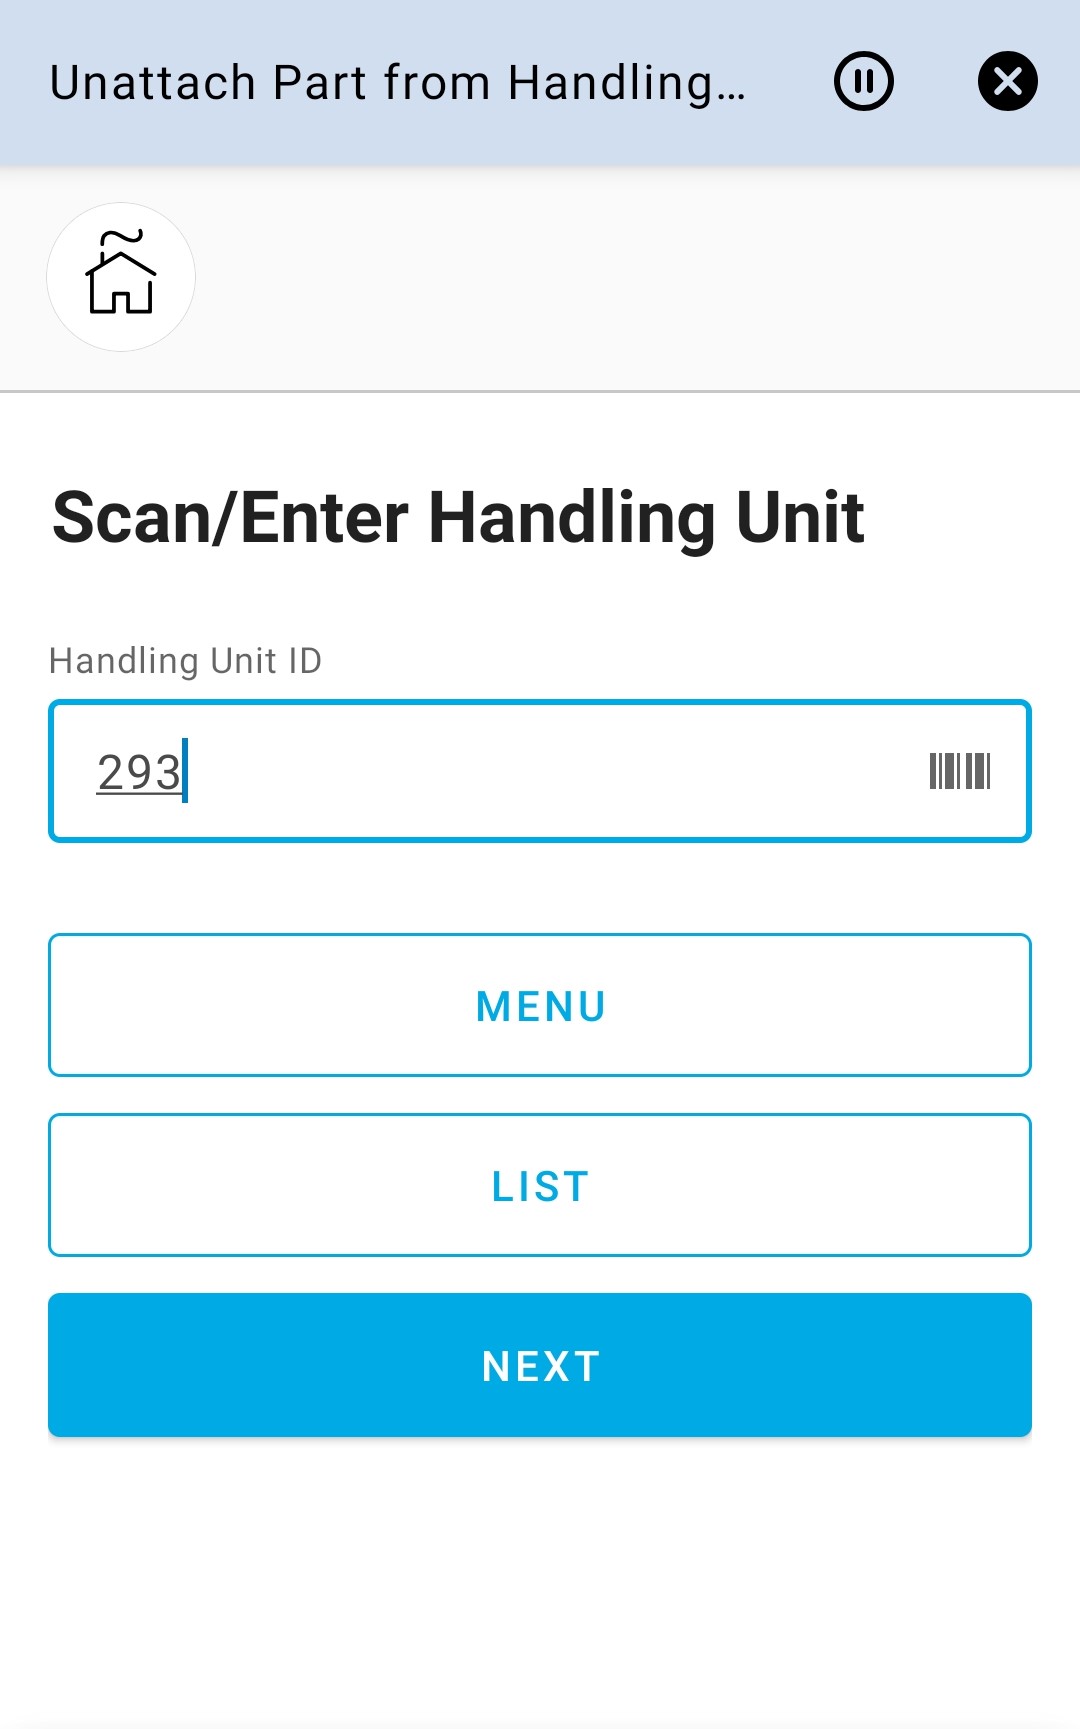 Enter Handling Unit ID 2